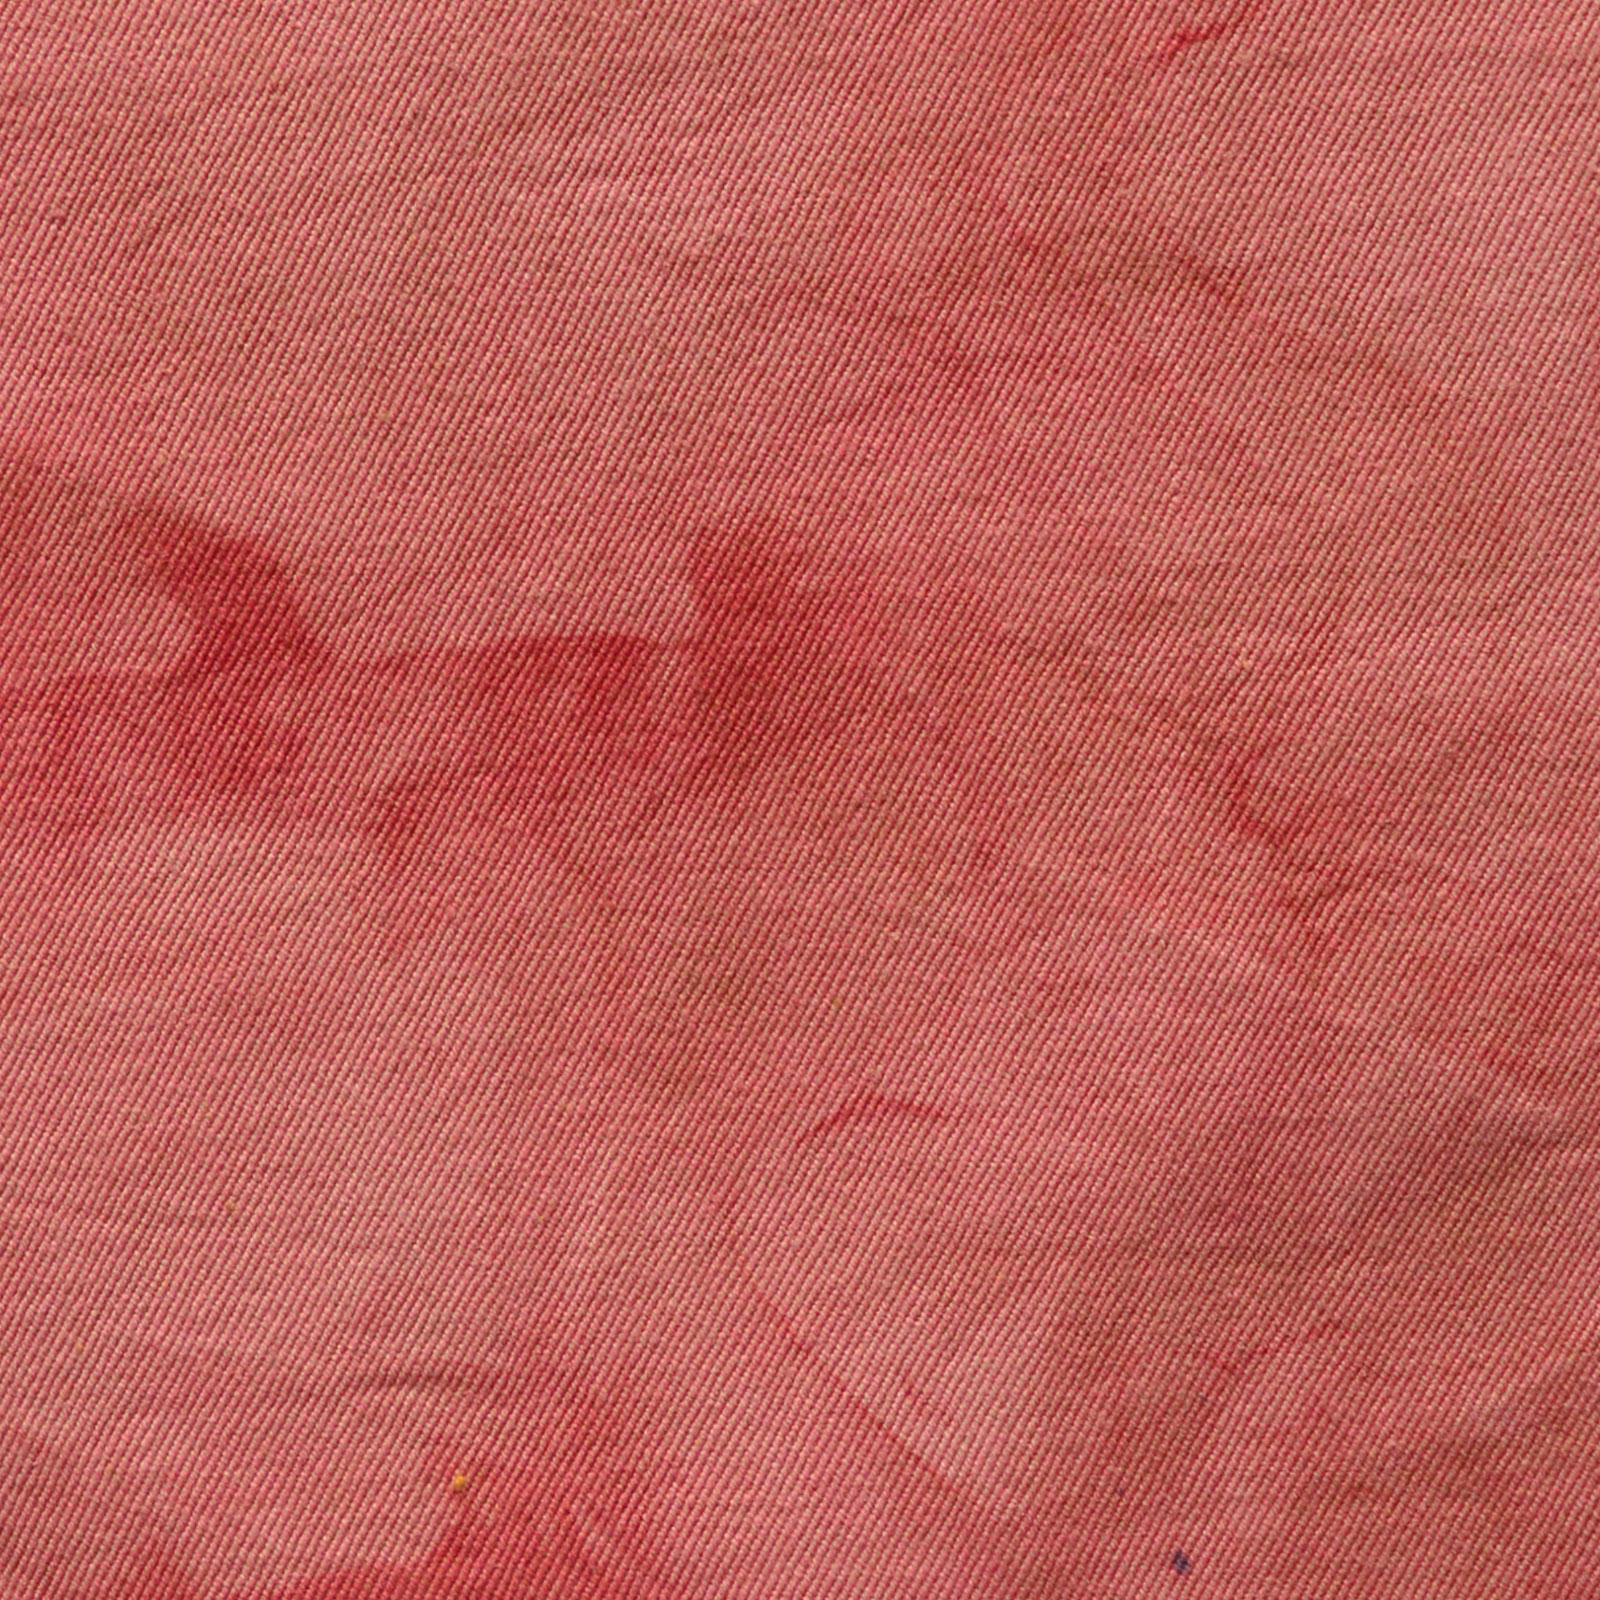 Medium Weight Handloom Selvedge Denim - Fabric Dyed - 10D x 10 - Blood Red - Madder Roots